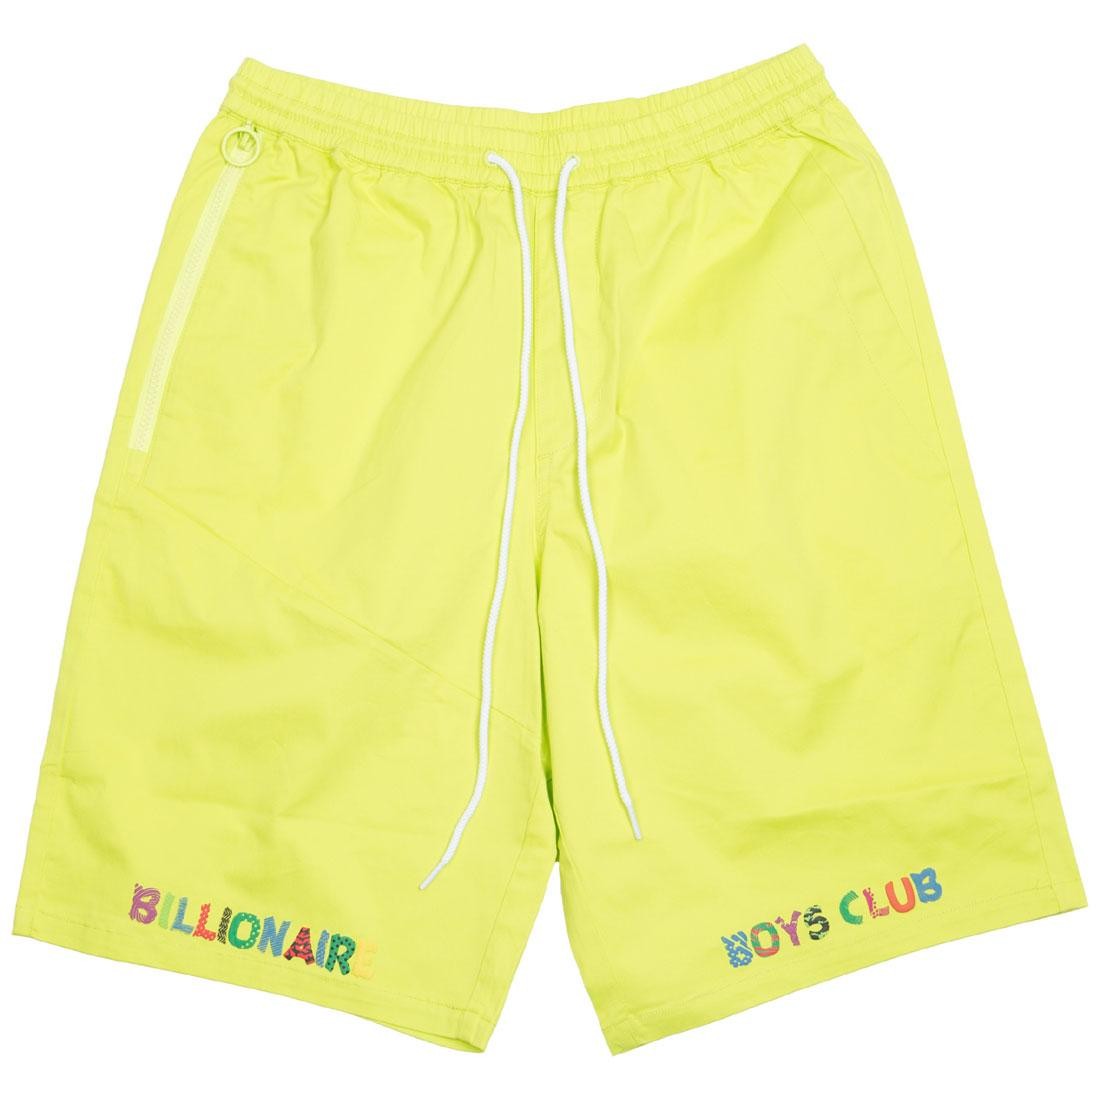 Billionaire Boys Club Men Smiles Shorts yellow lime